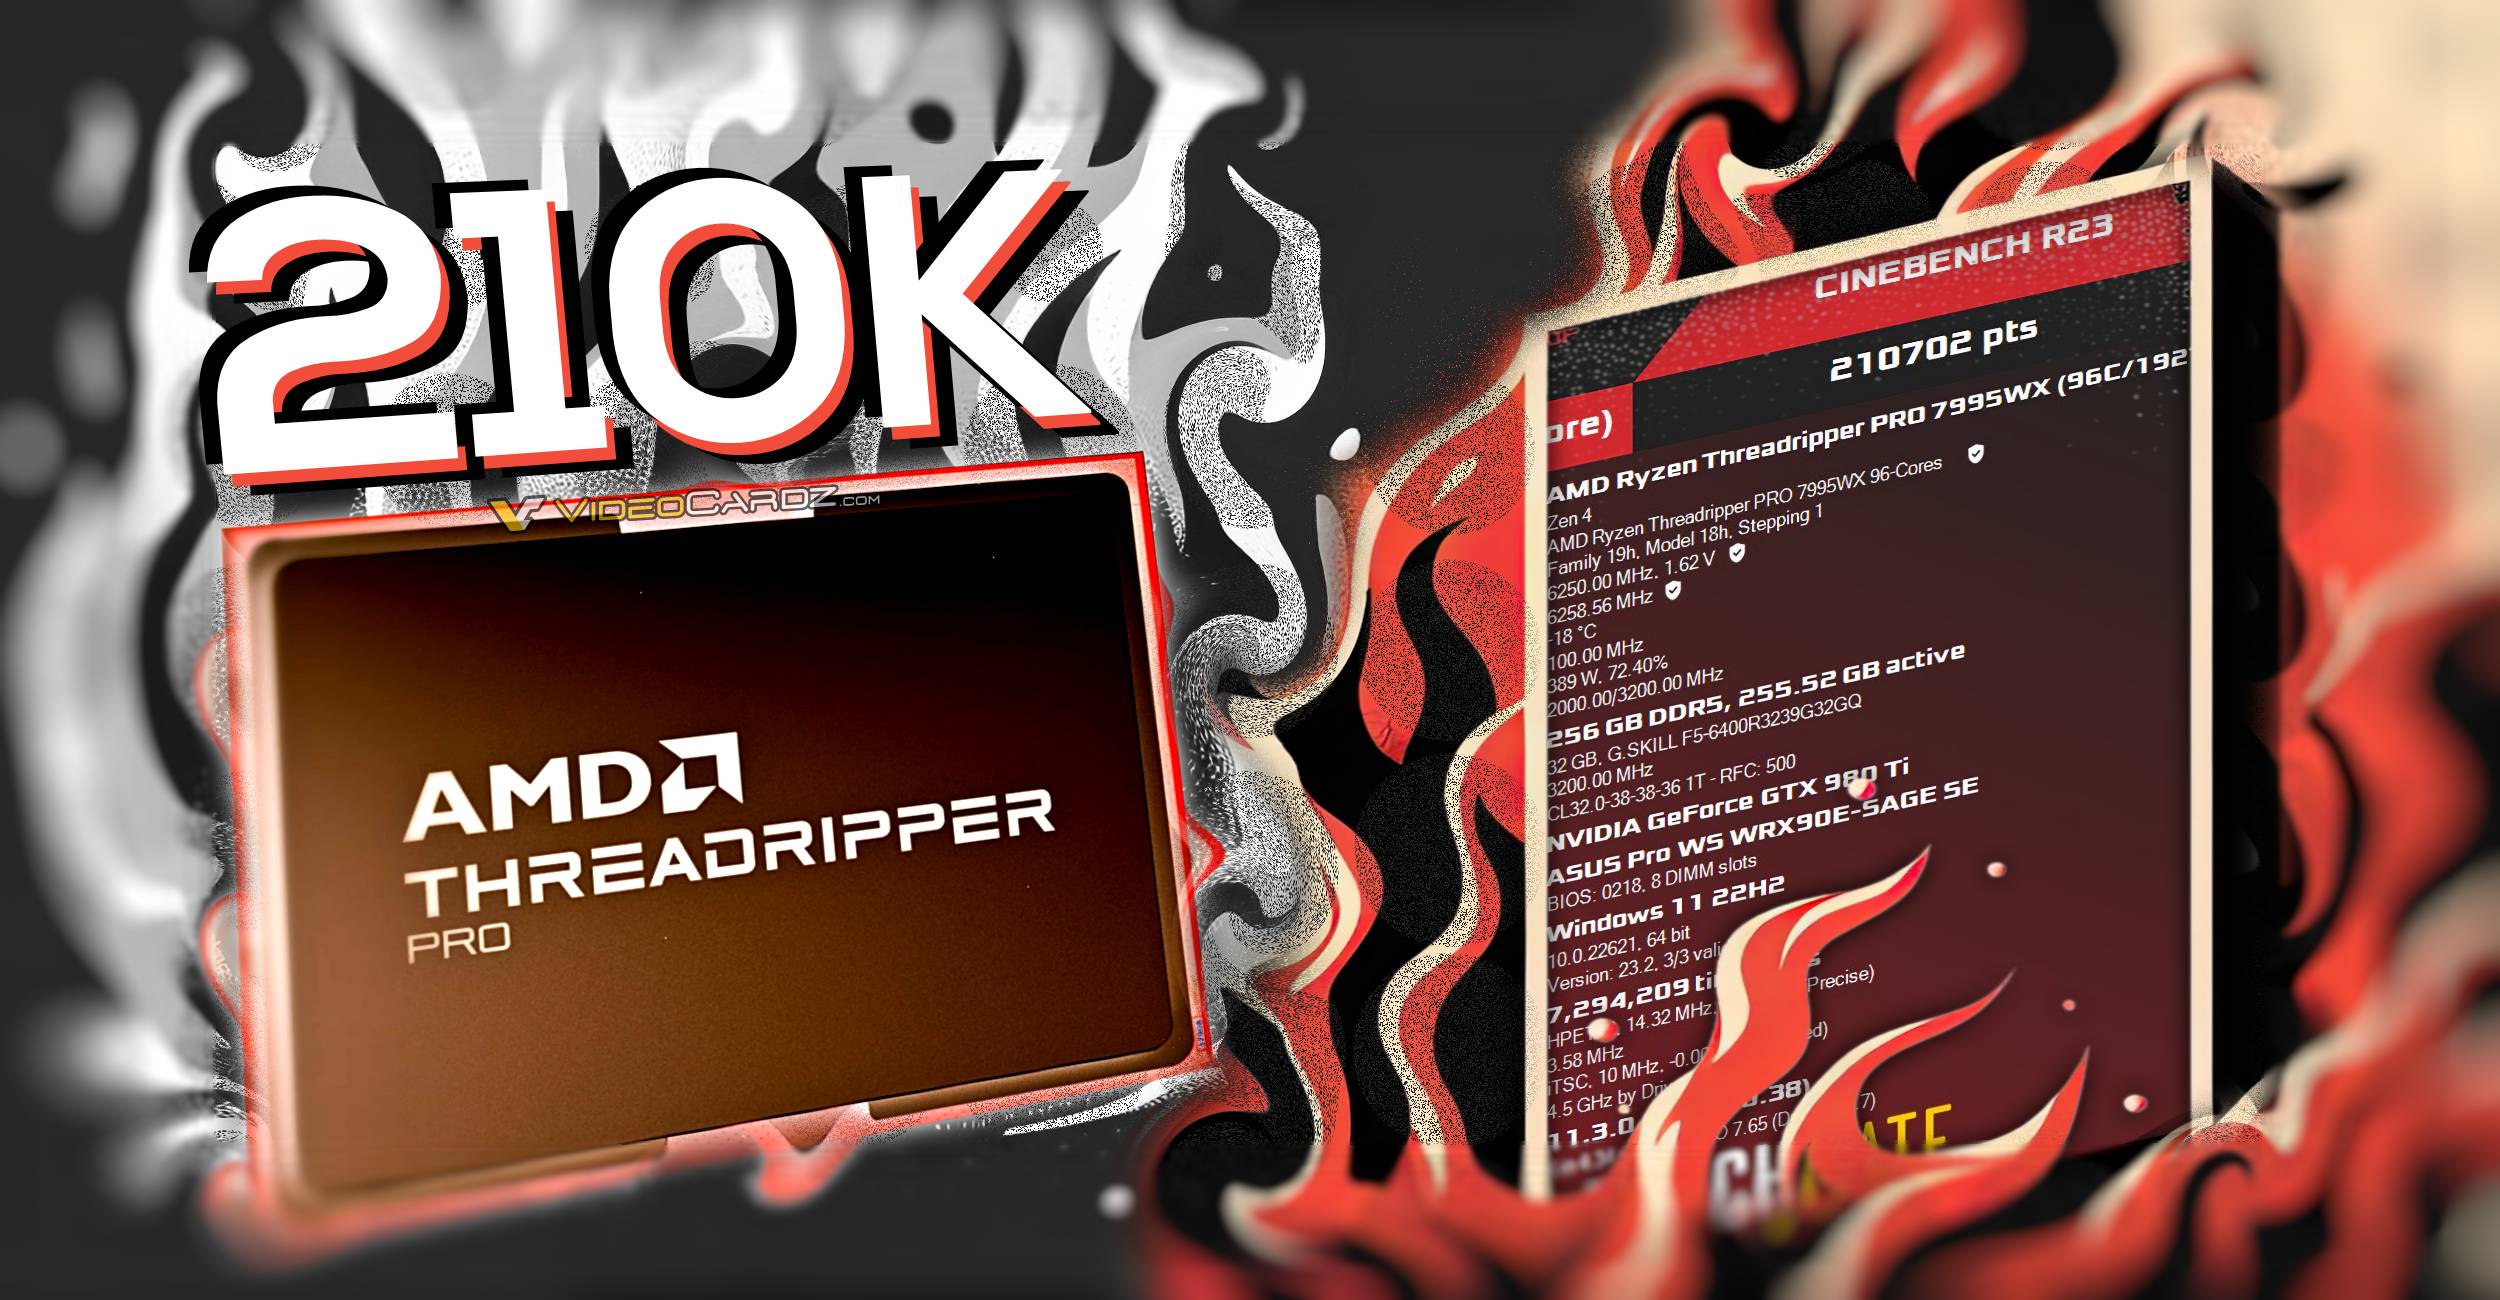 Is An AMD Threadripper Worth It? Part 1 of 2